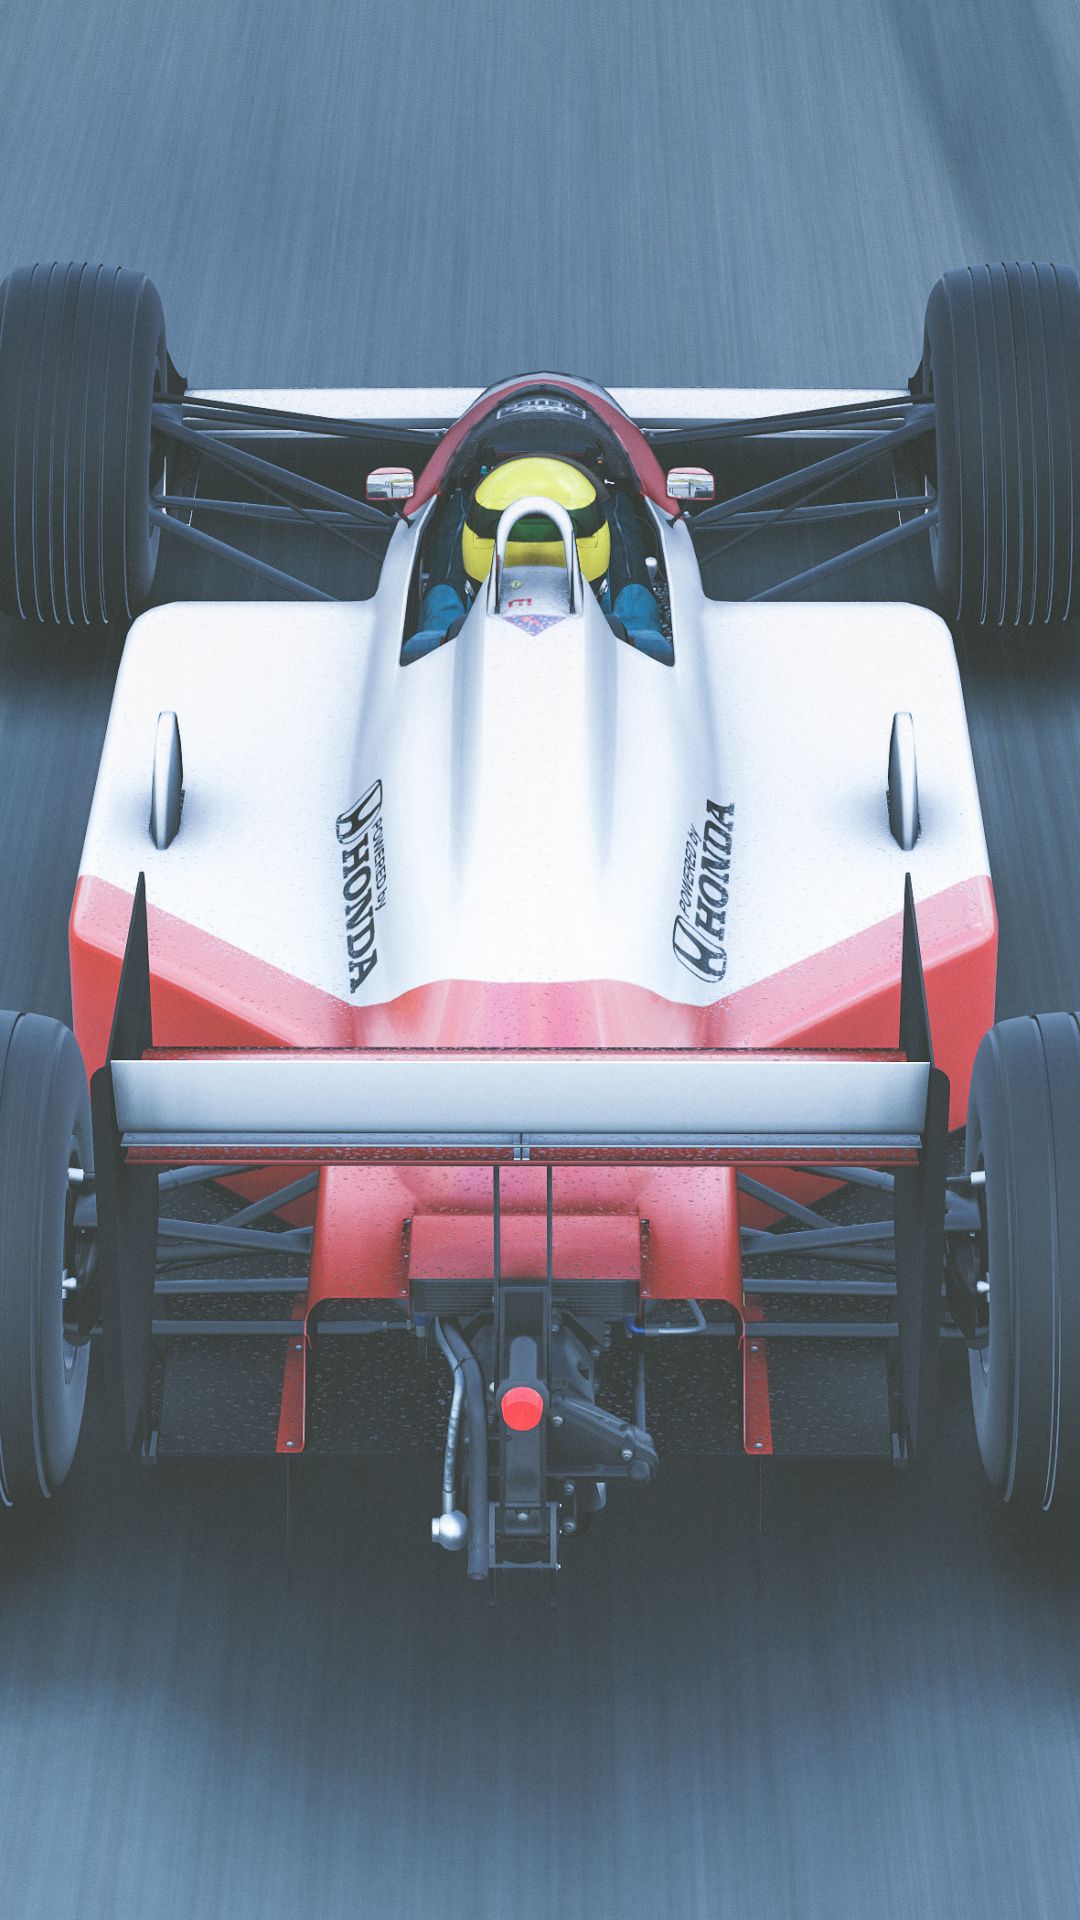 Video Game F1 Race Car Mclaren Wallpaper